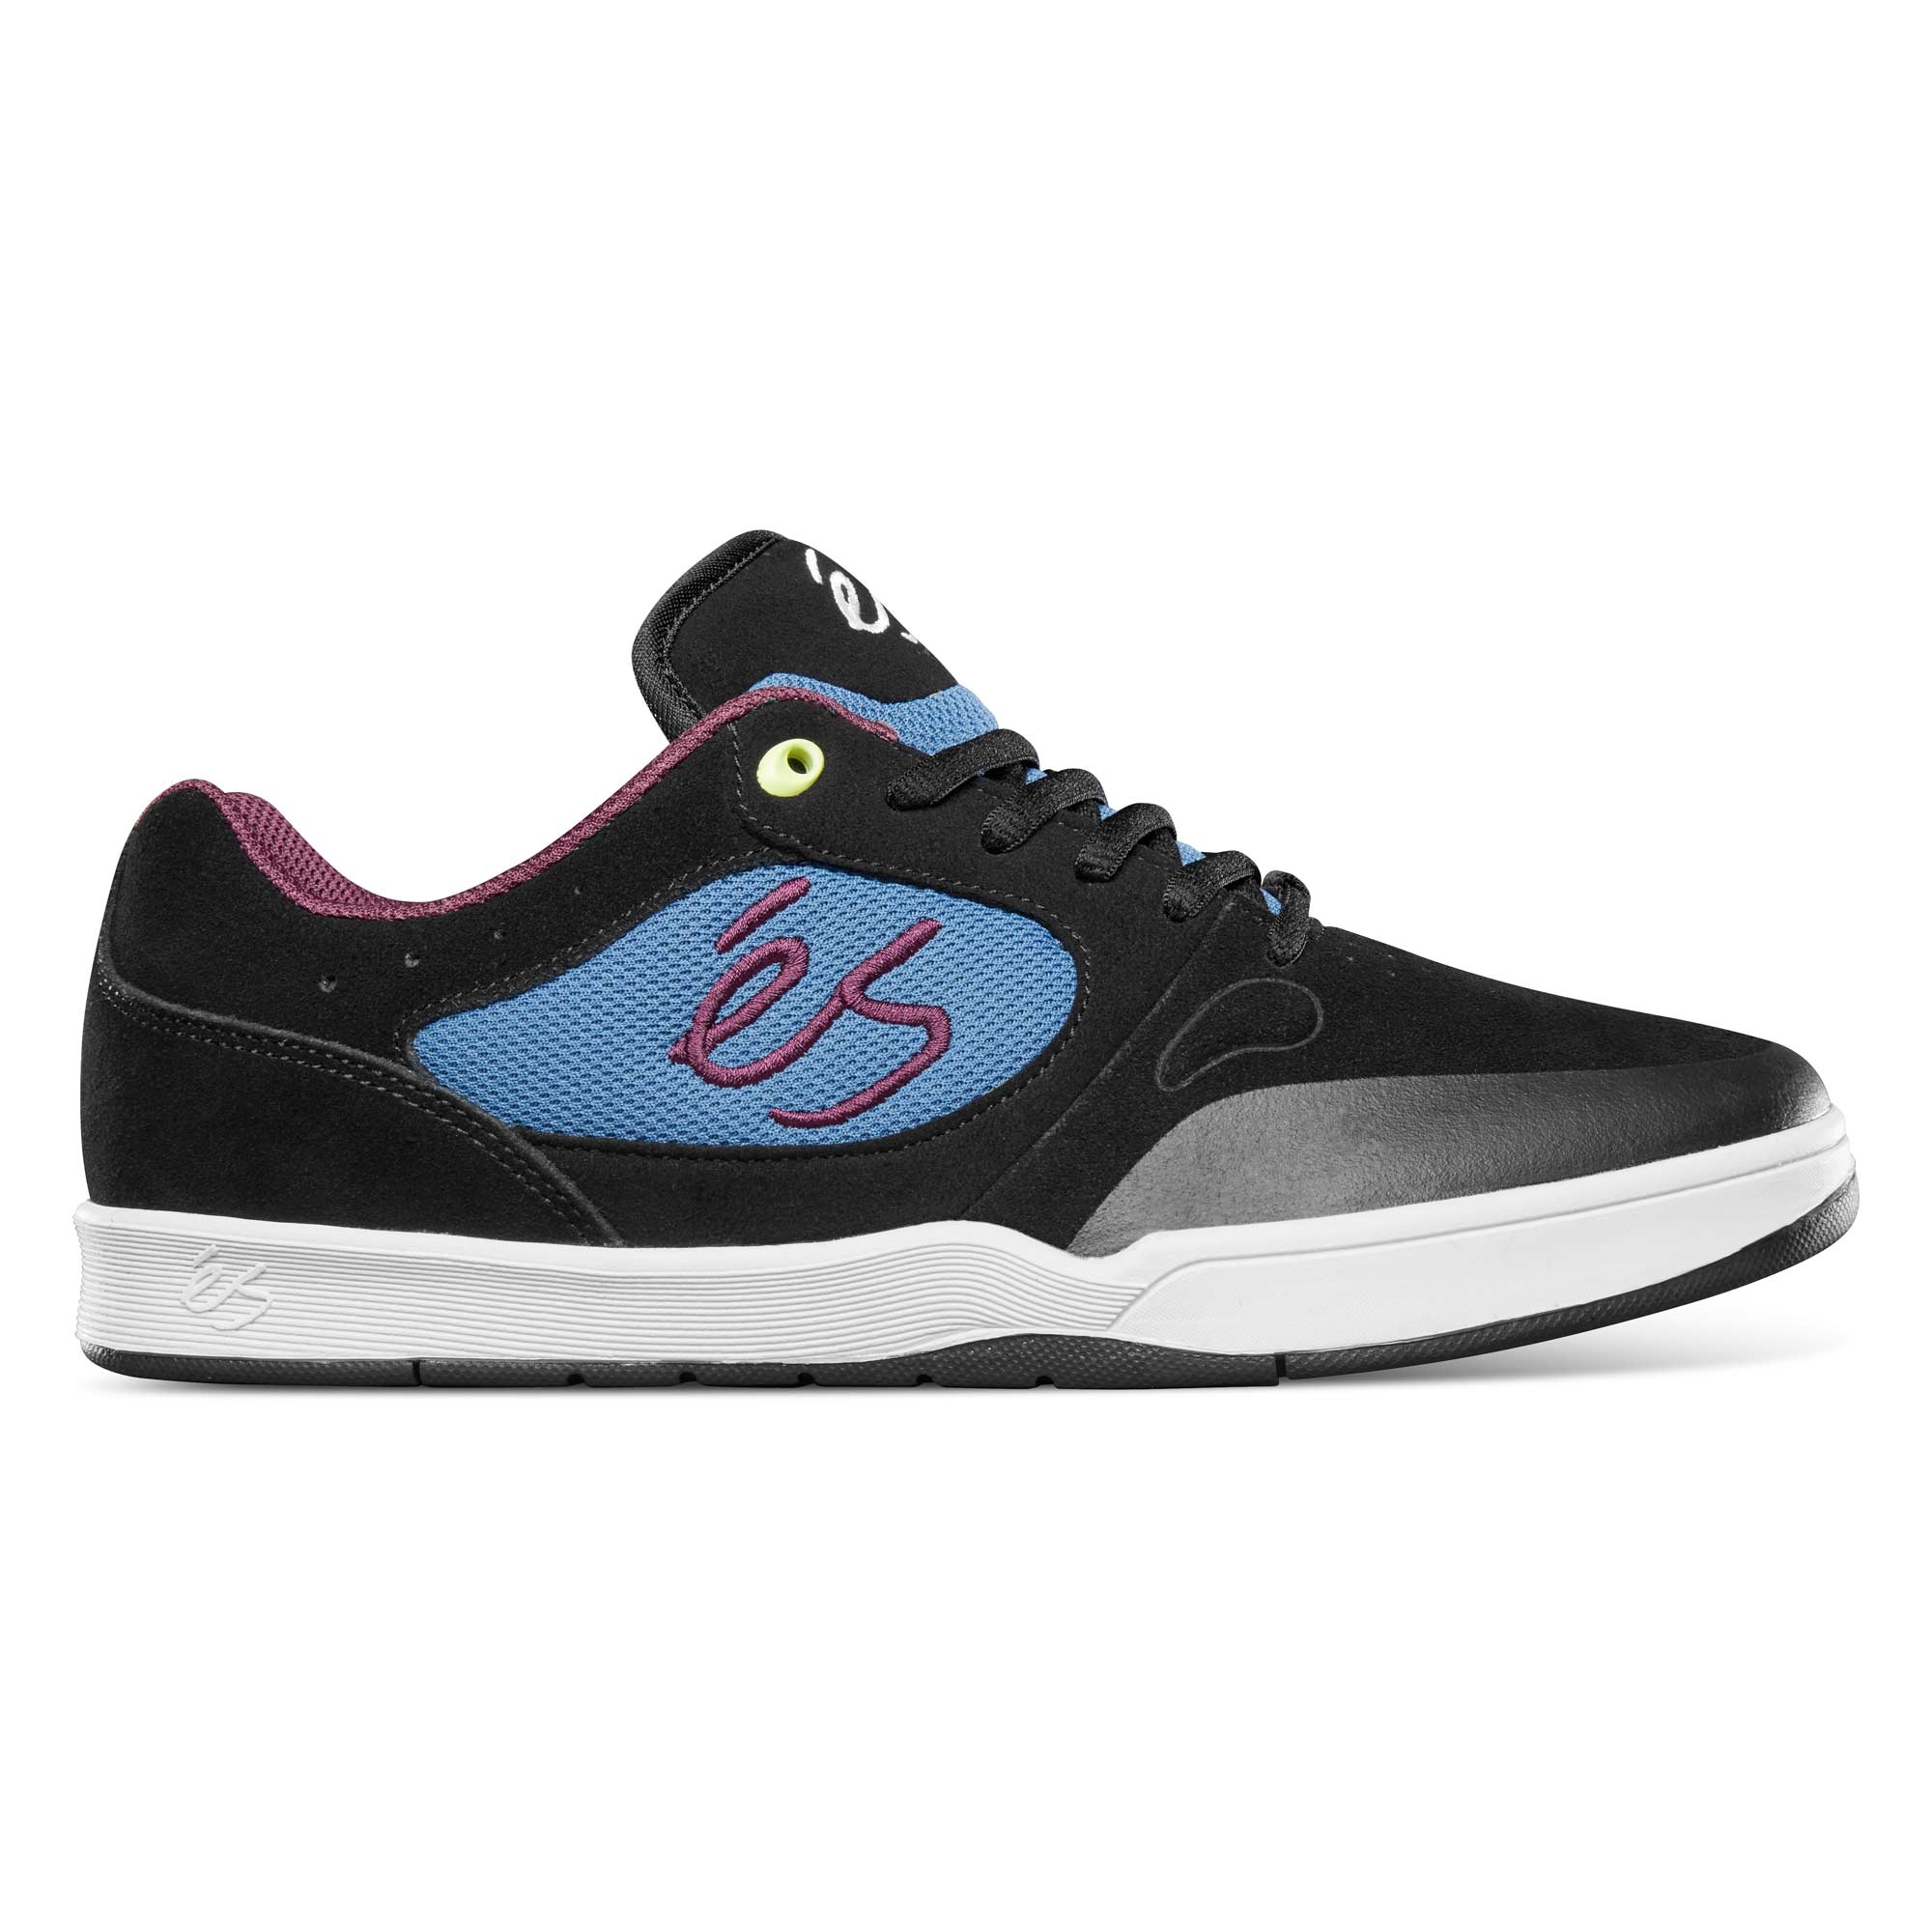 eS SKB Shoe SWIFT 1.5 bla/blu/pur black/blue/purple